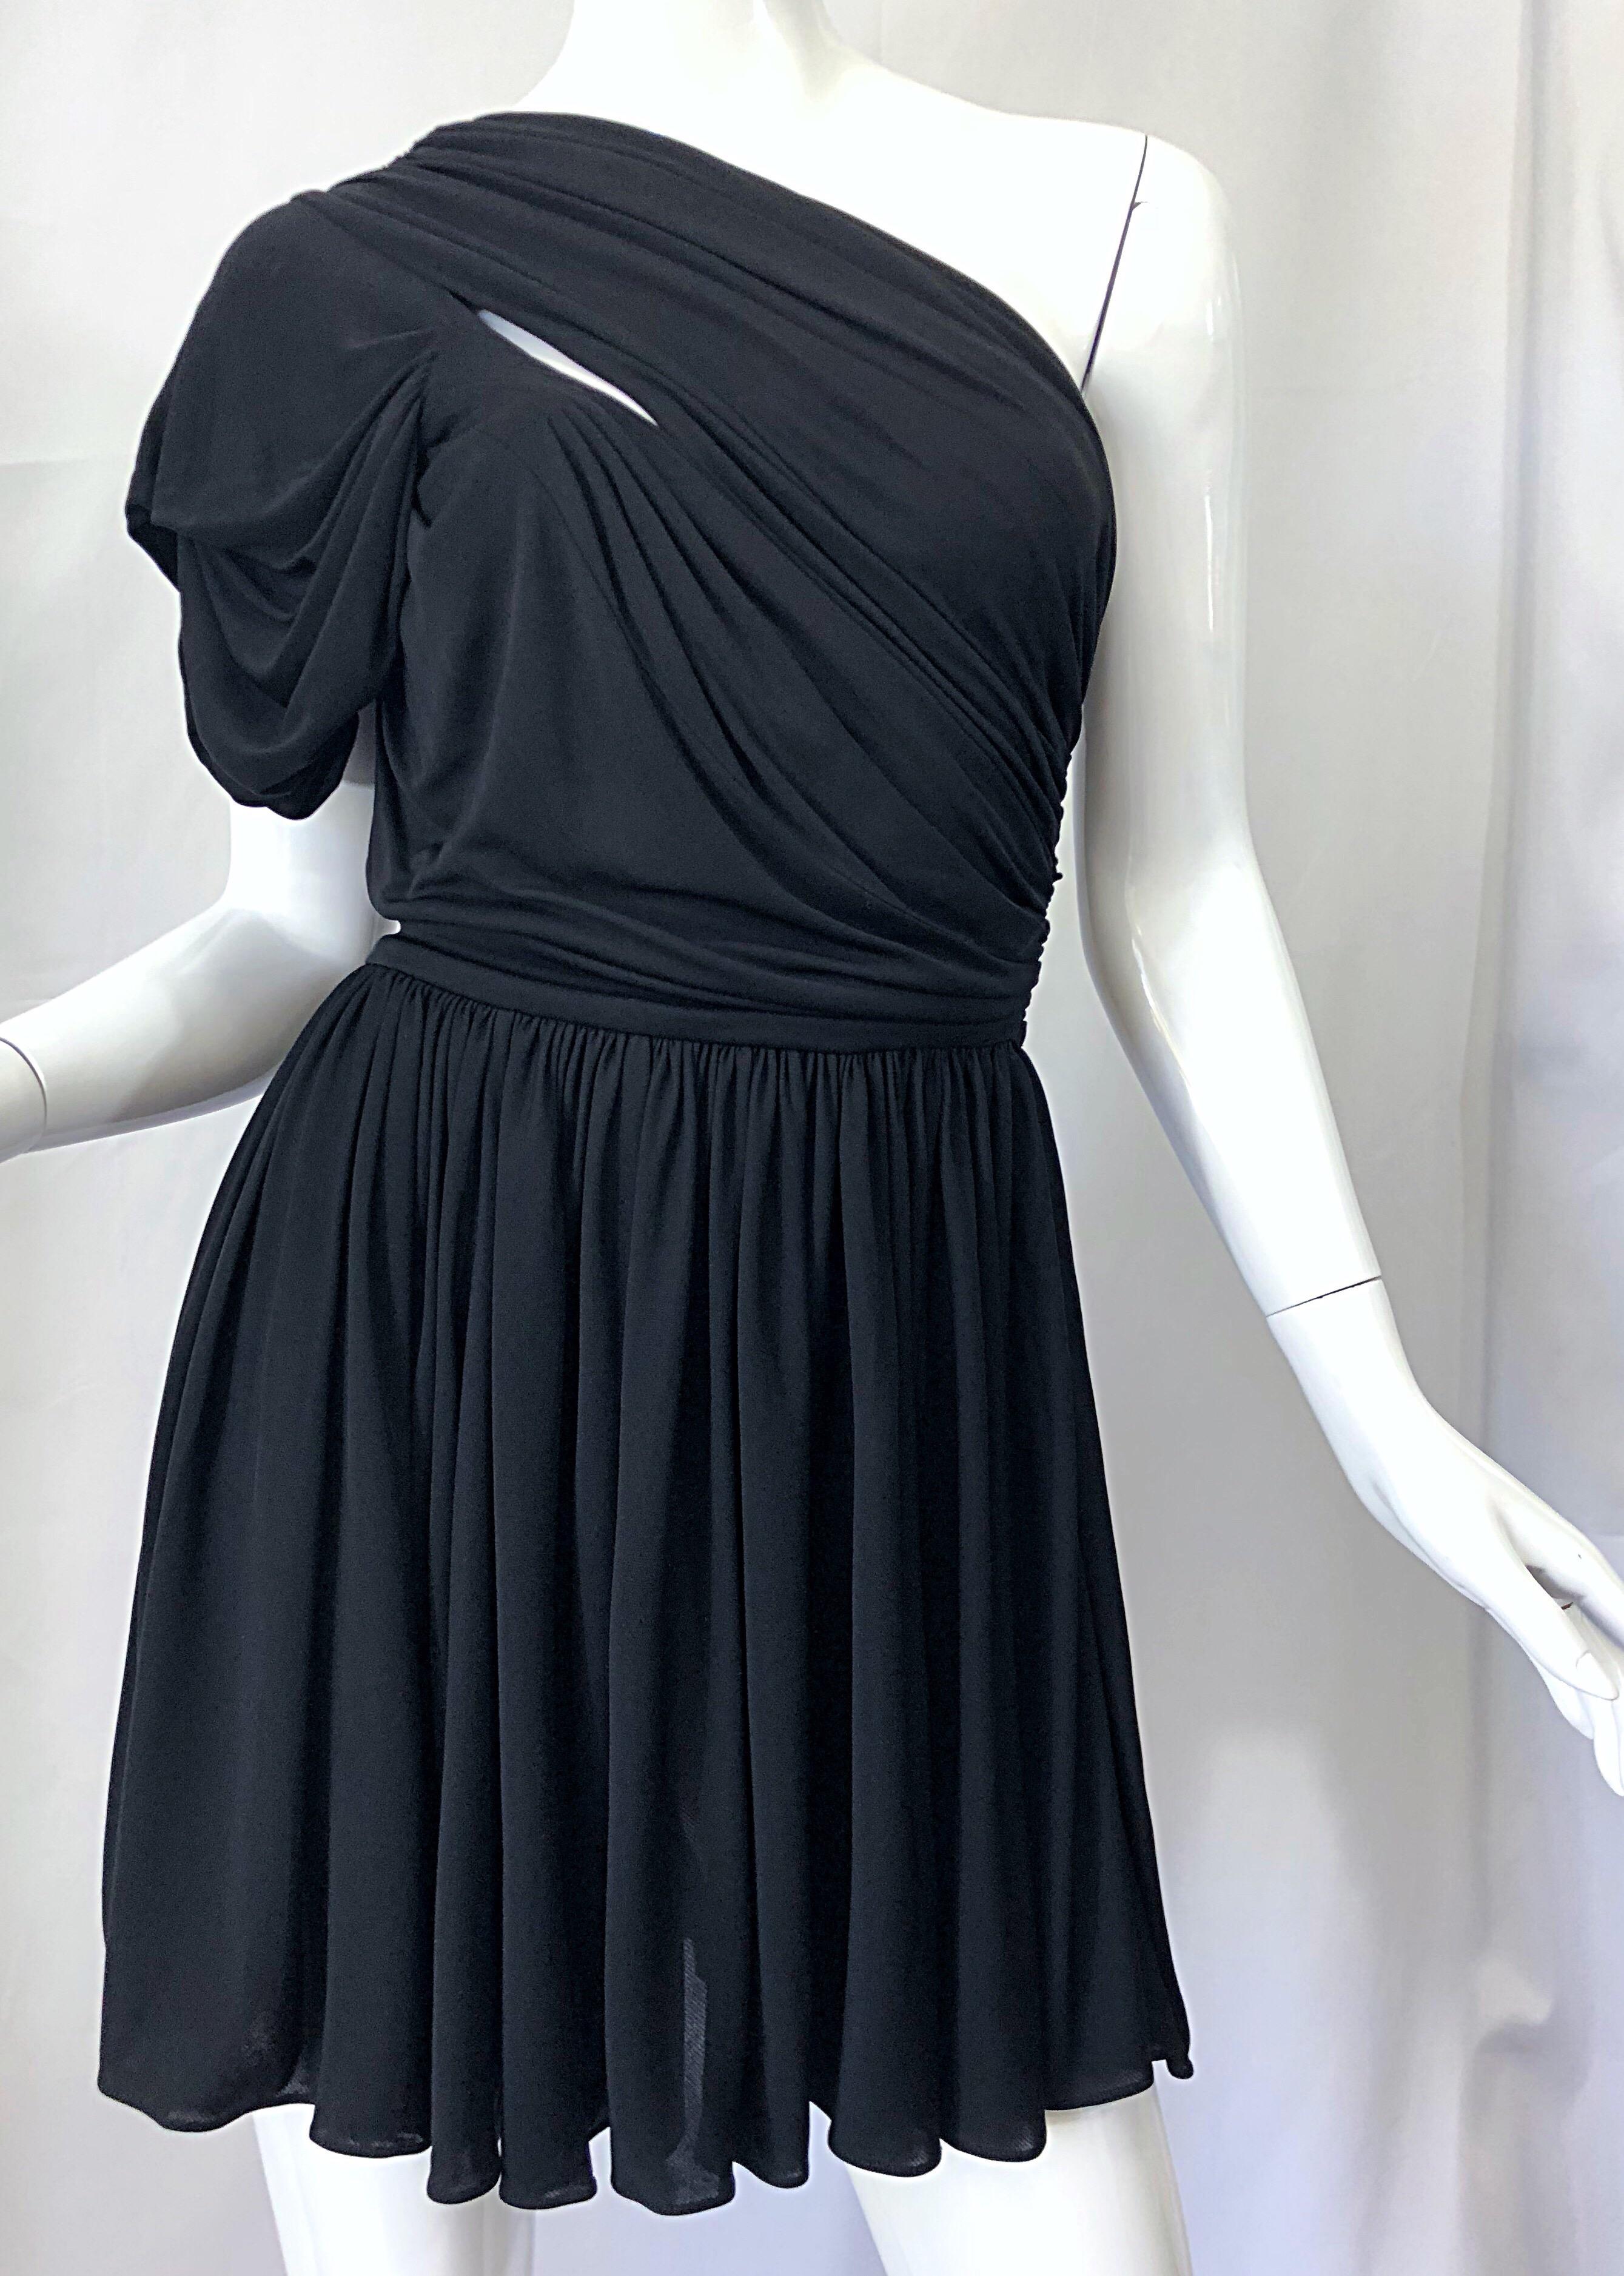 John Galliano Sz 42 6 / 8 2000s Black One Shoulder Grecian Vintage Mini Dress For Sale 7